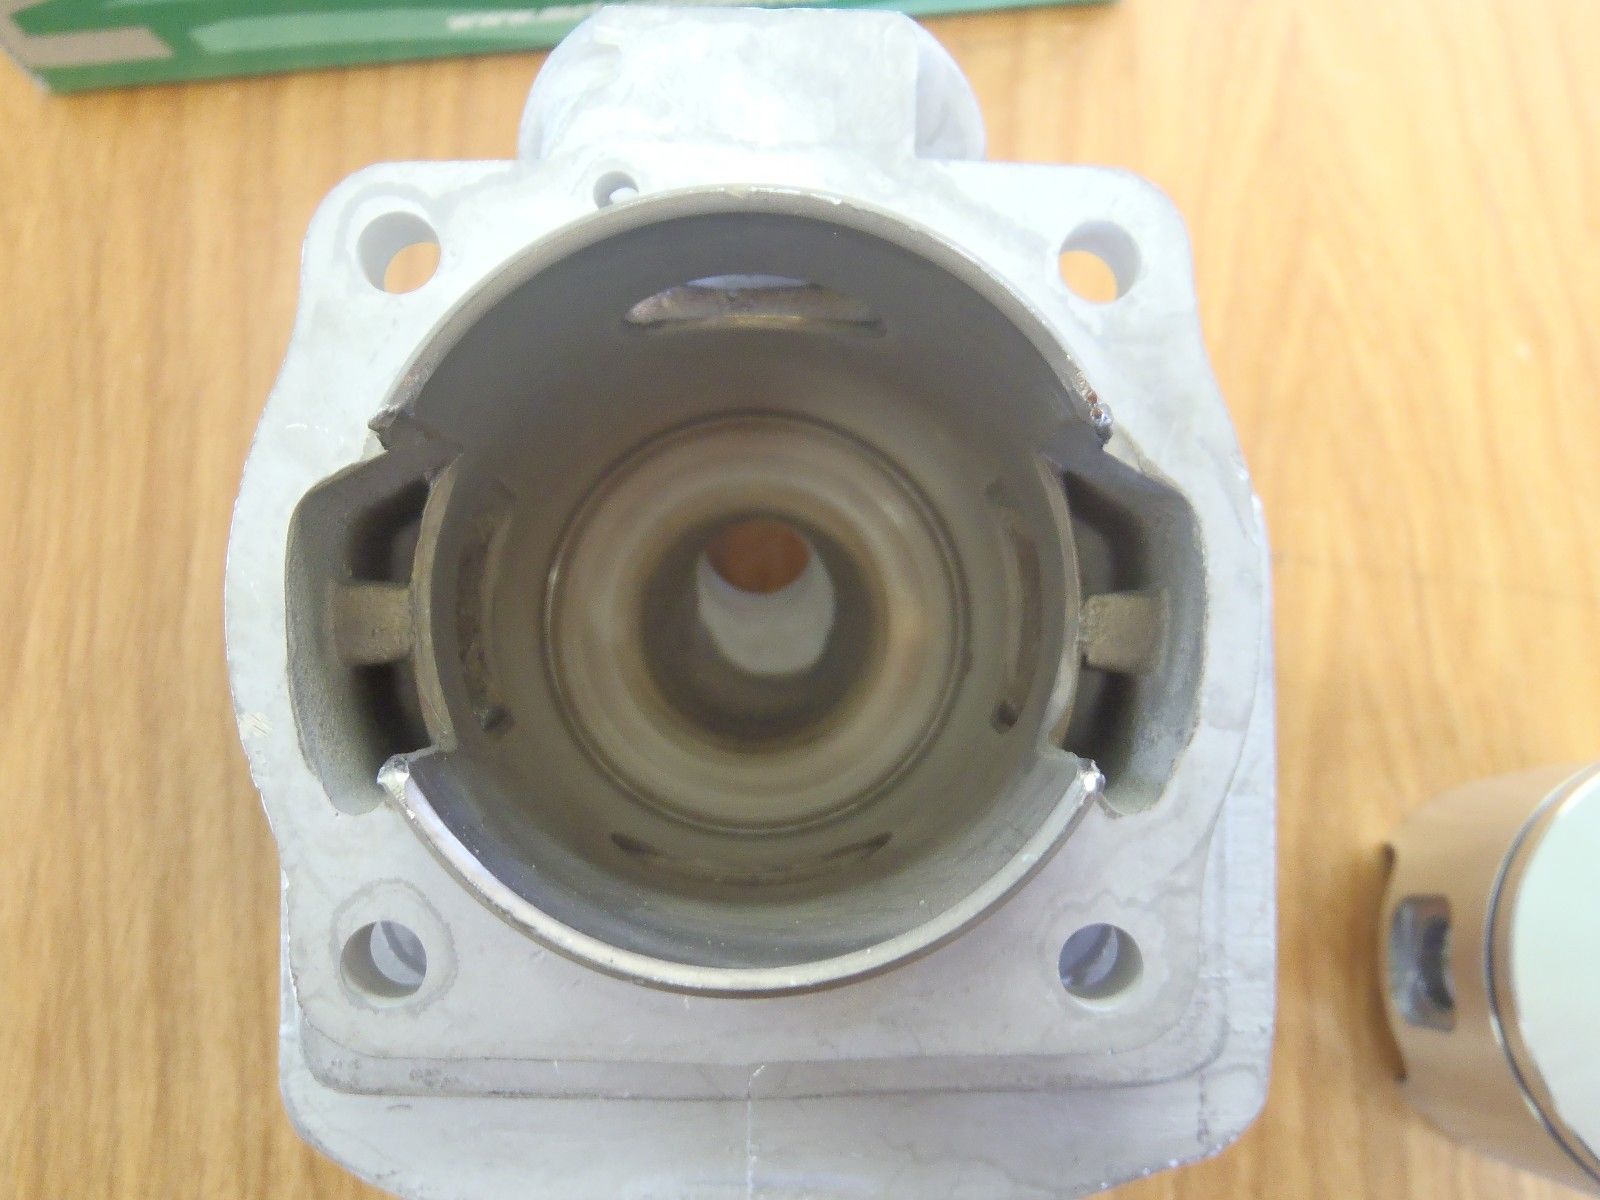 TOPINCN Cylinder Piston Gasket Kit for Husqvarna 50,51,55 Rancher Nikasil Engine Patio Garden Lawn Replacement Tools 46mm 